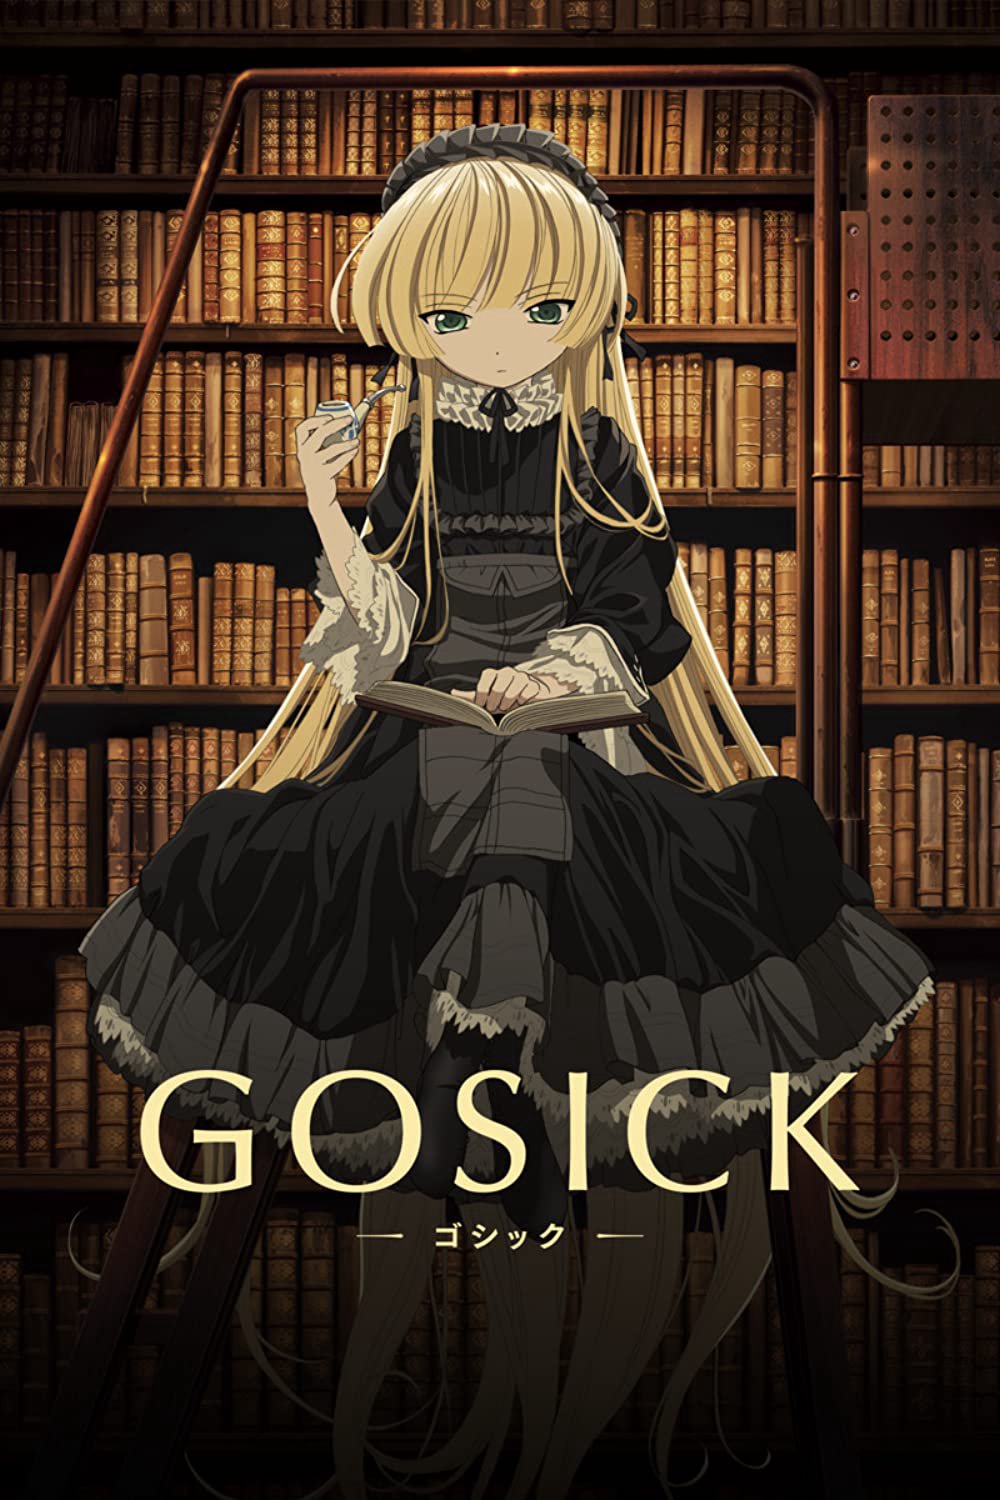 Gosick - Gosick- 725 />
                    </figure>
</div>
           <div class=